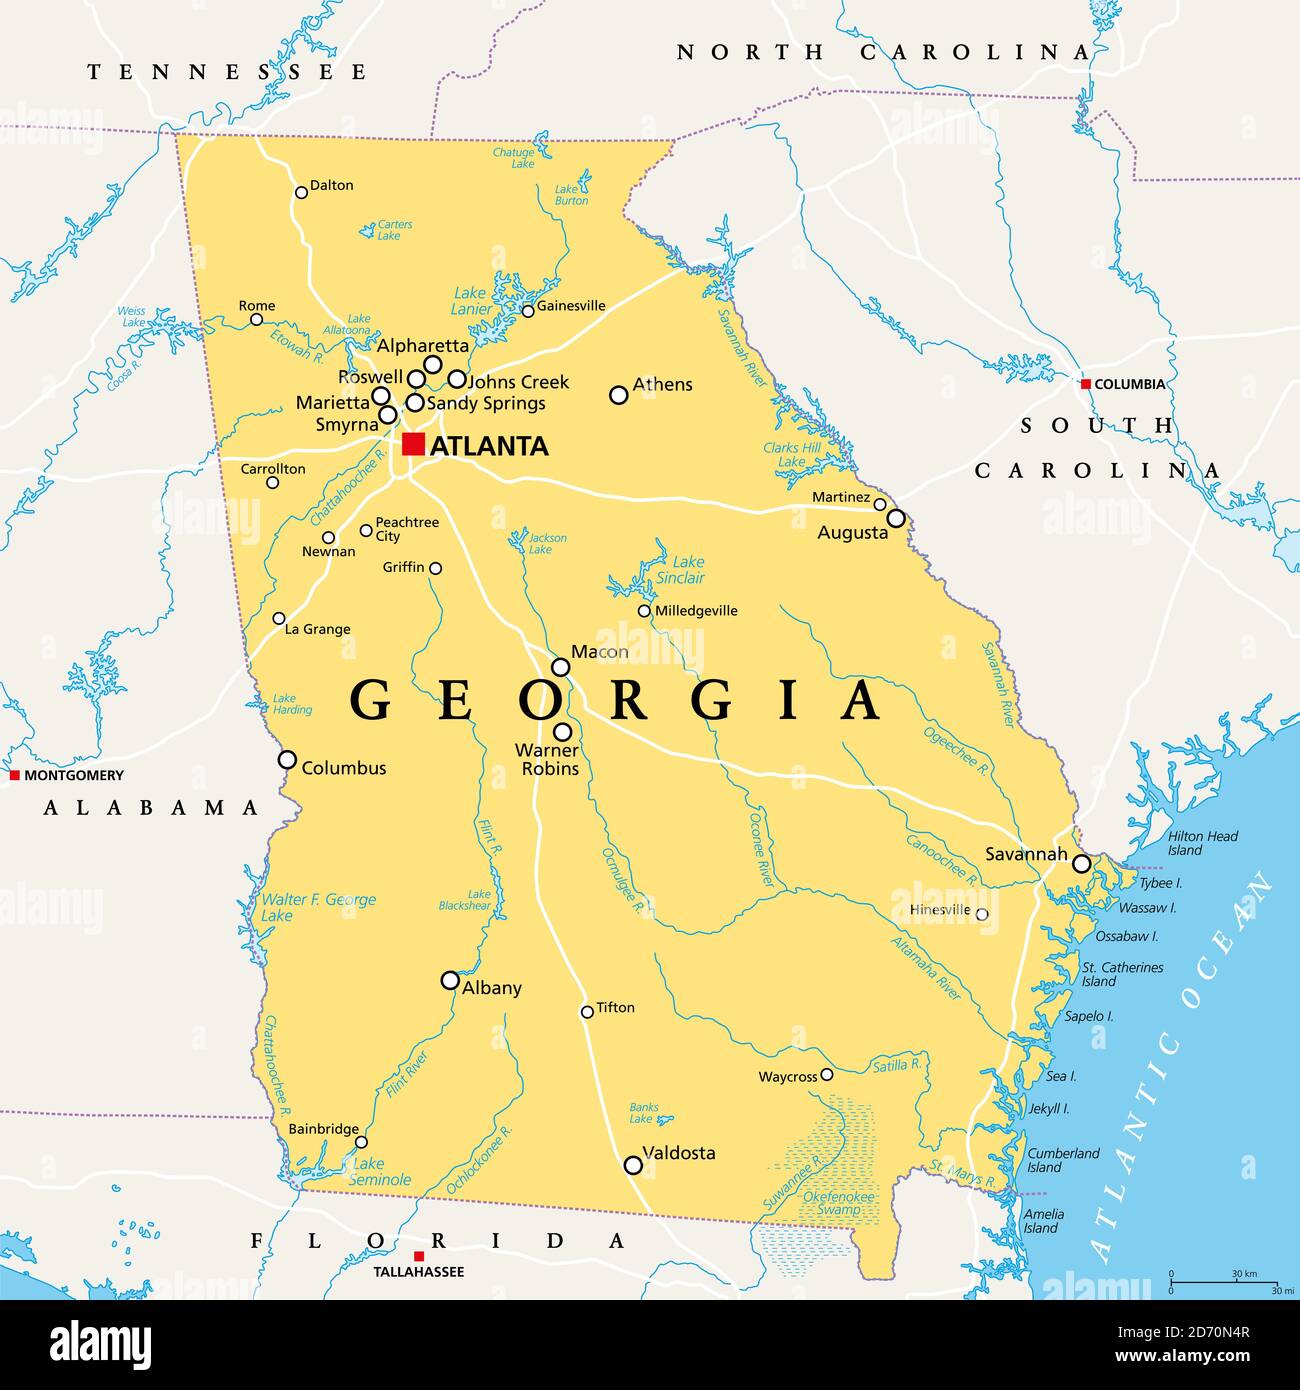 Map Of Atlanta Georgia - United States Map